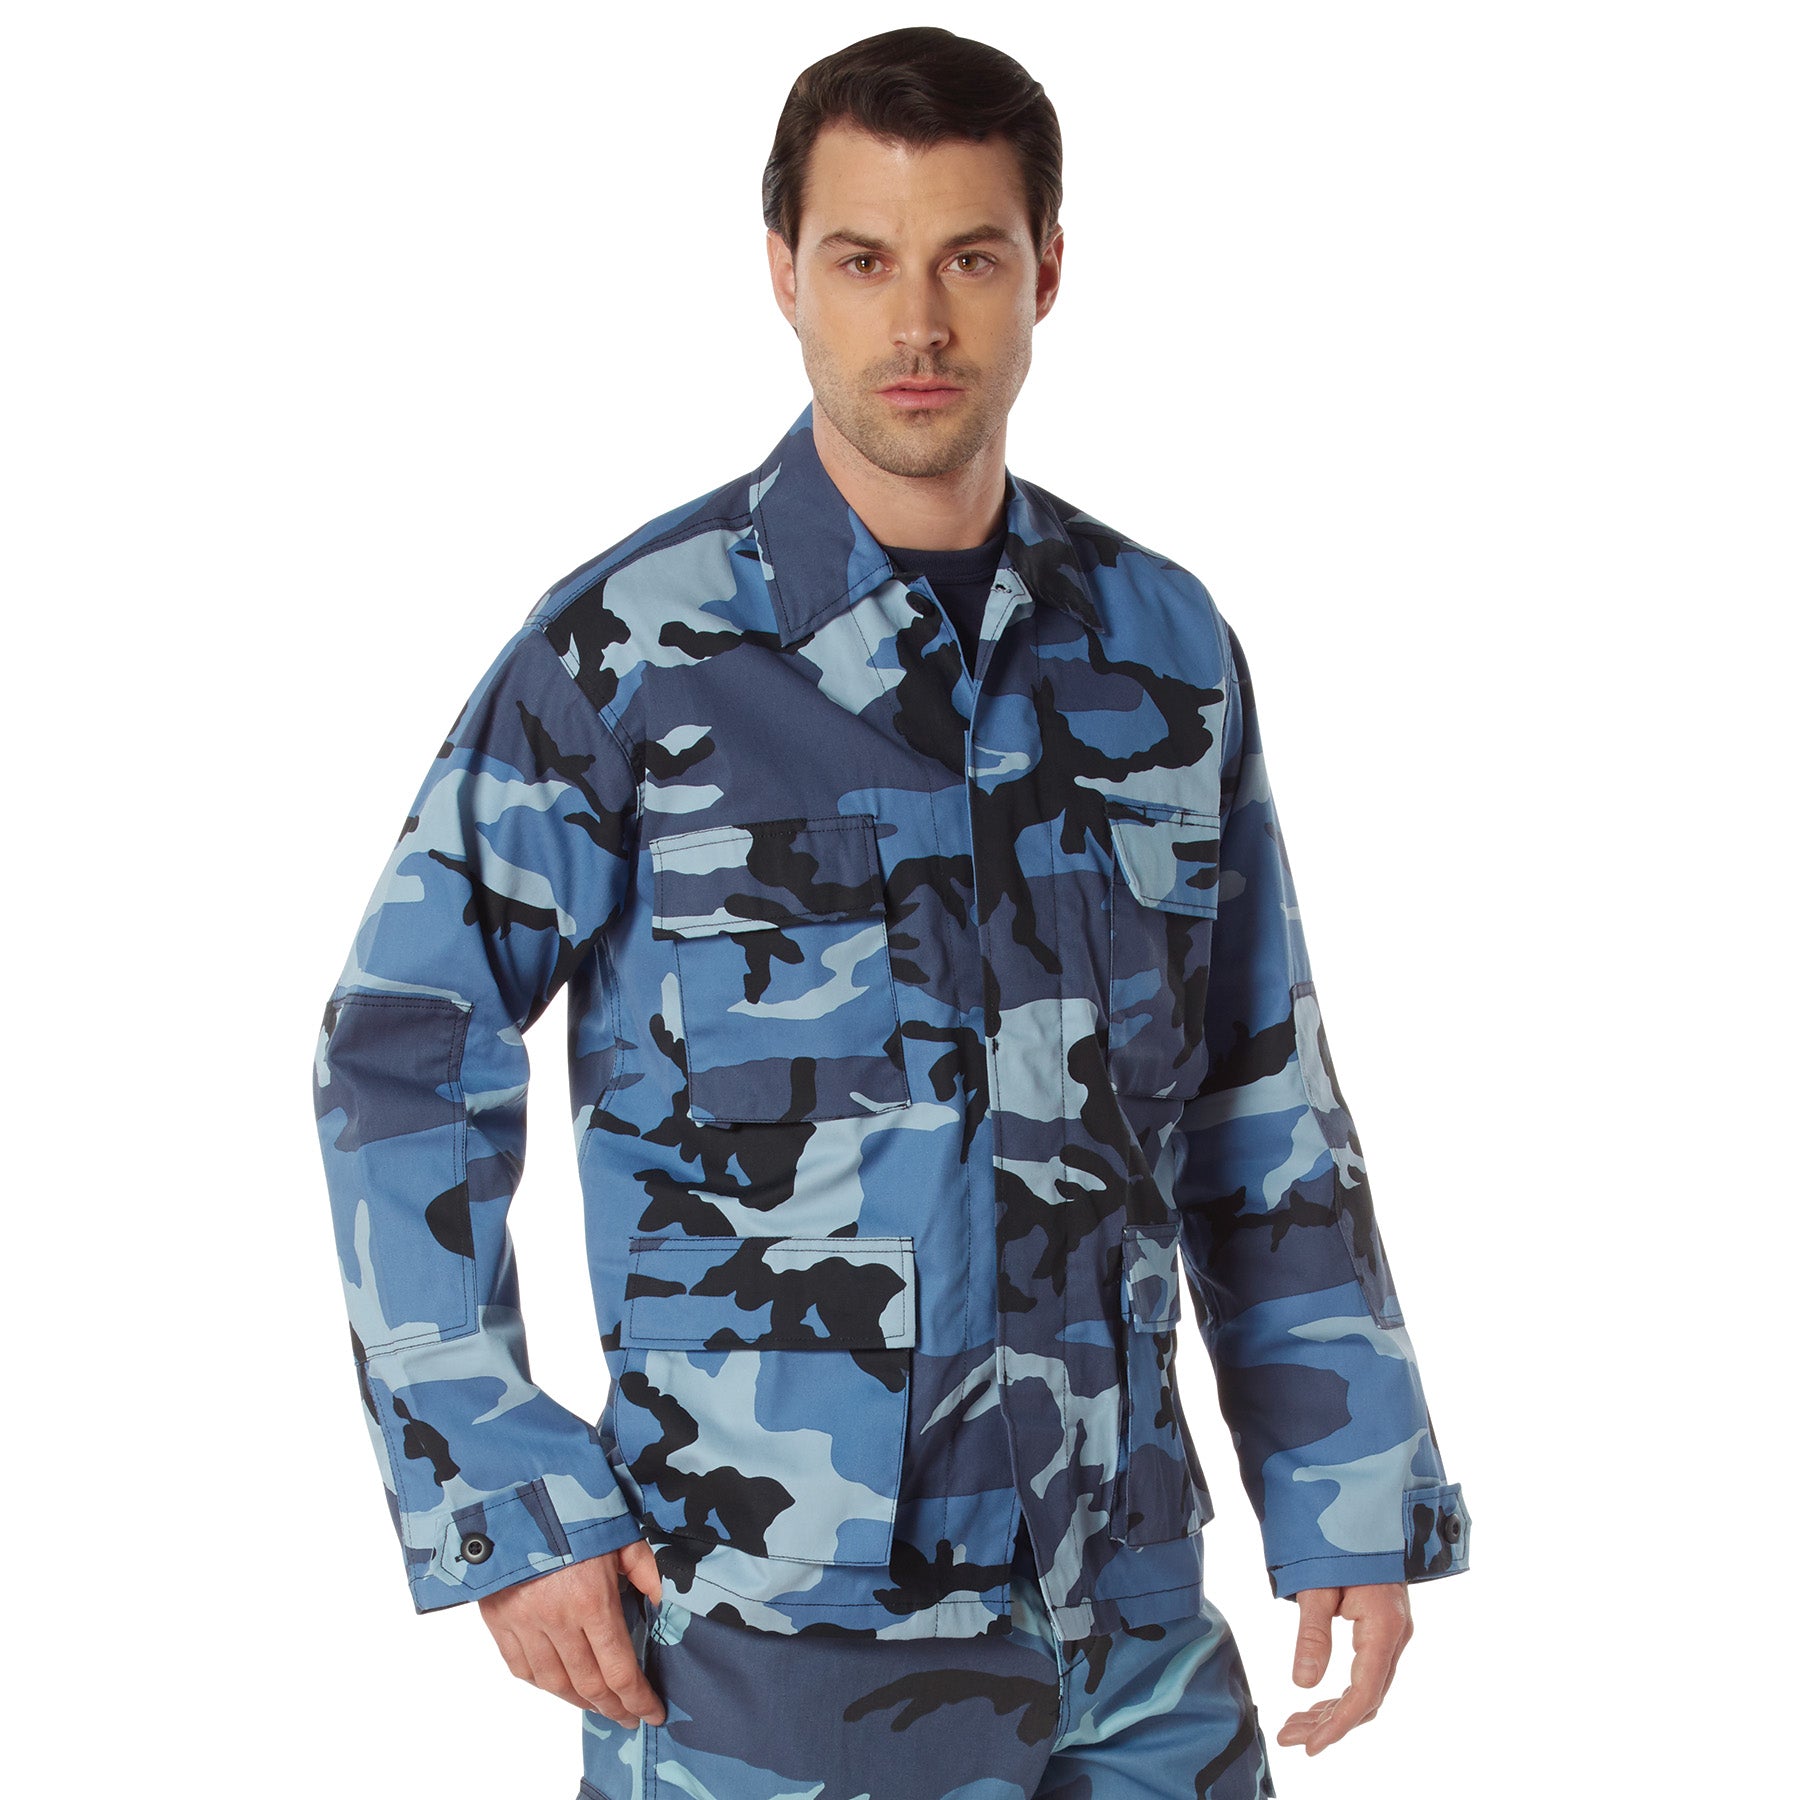 Camo Poly/Cotton Tactical BDU Shirts Sky Blue Camo